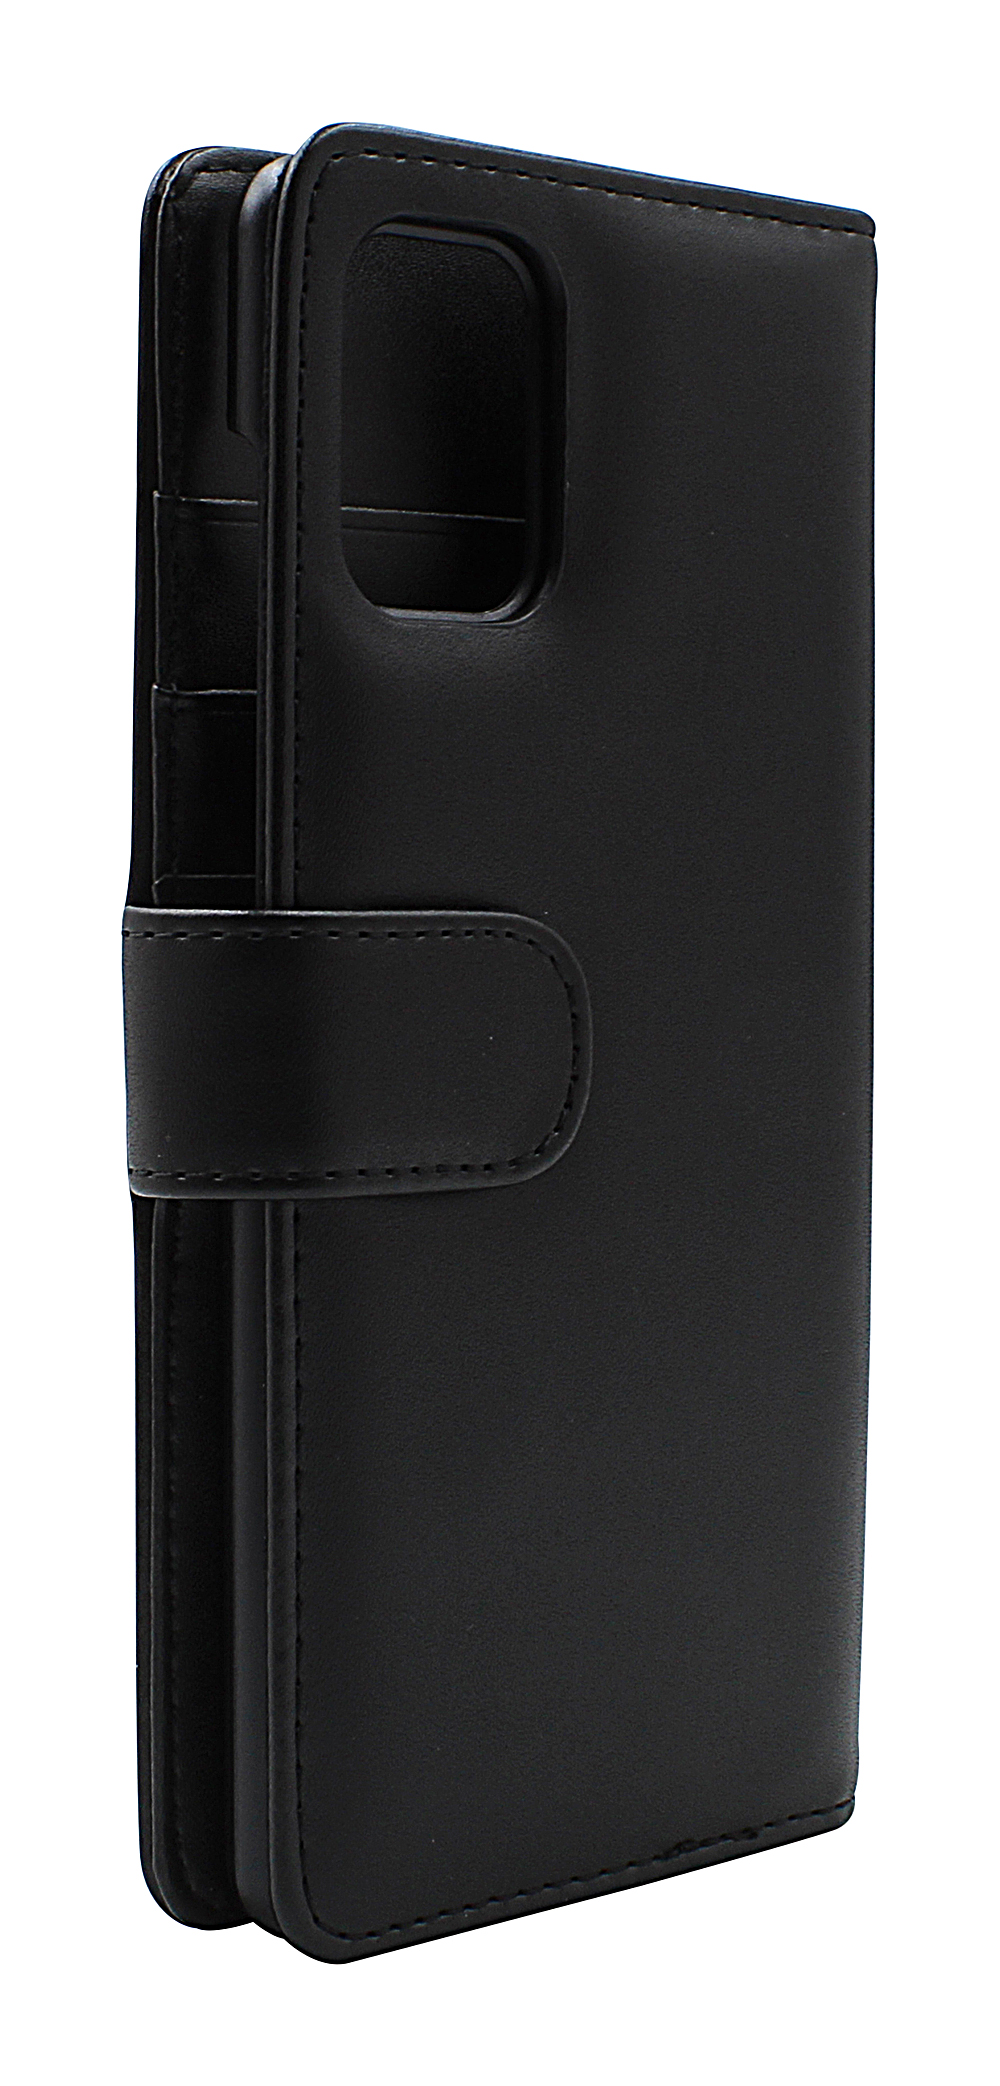 CoverInSkimblocker Plnboksfodral Samsung Galaxy A71 (A715F/DS)